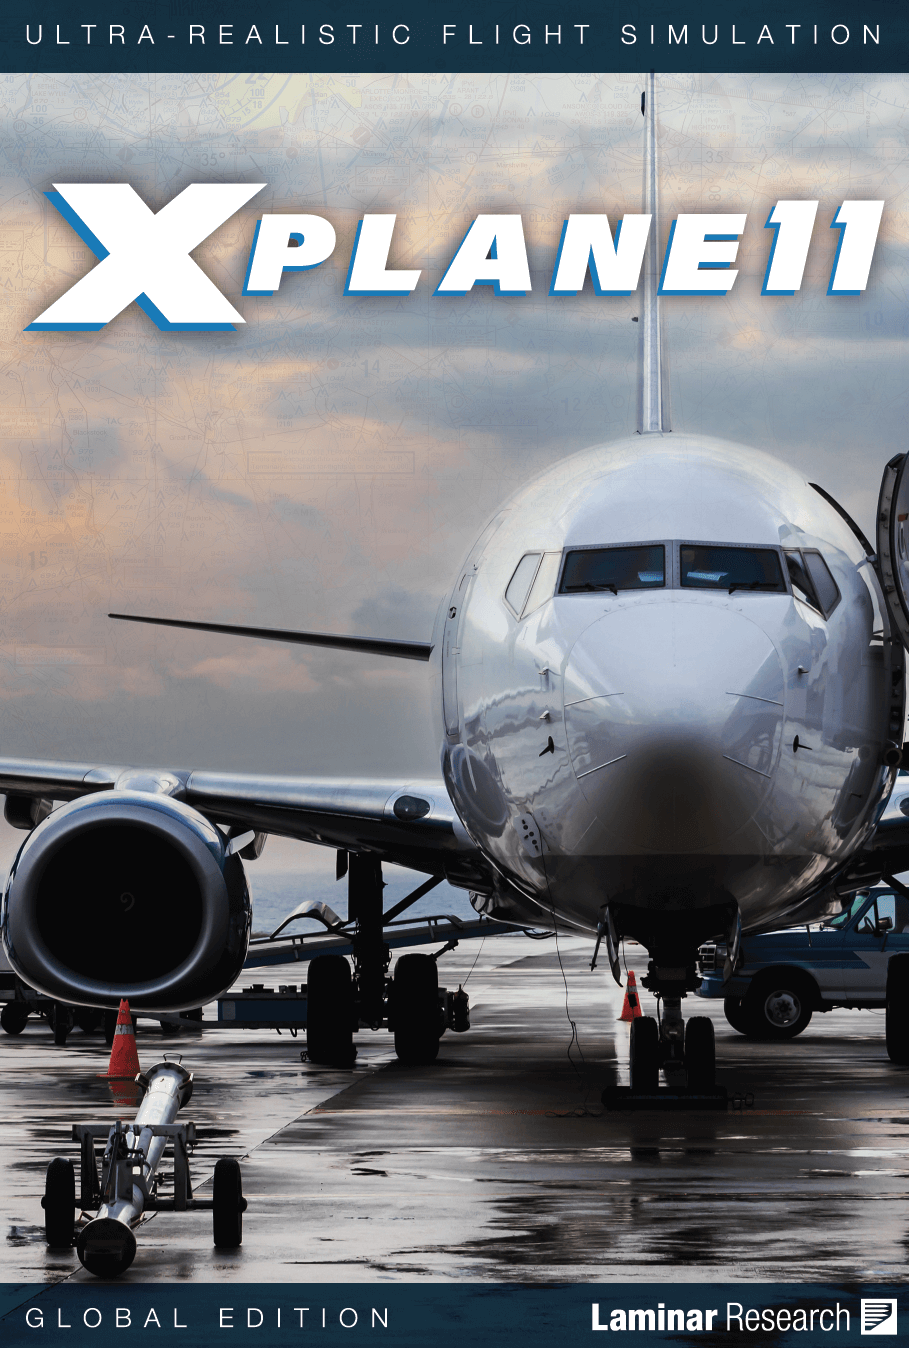 x plane 11 download free full version windows